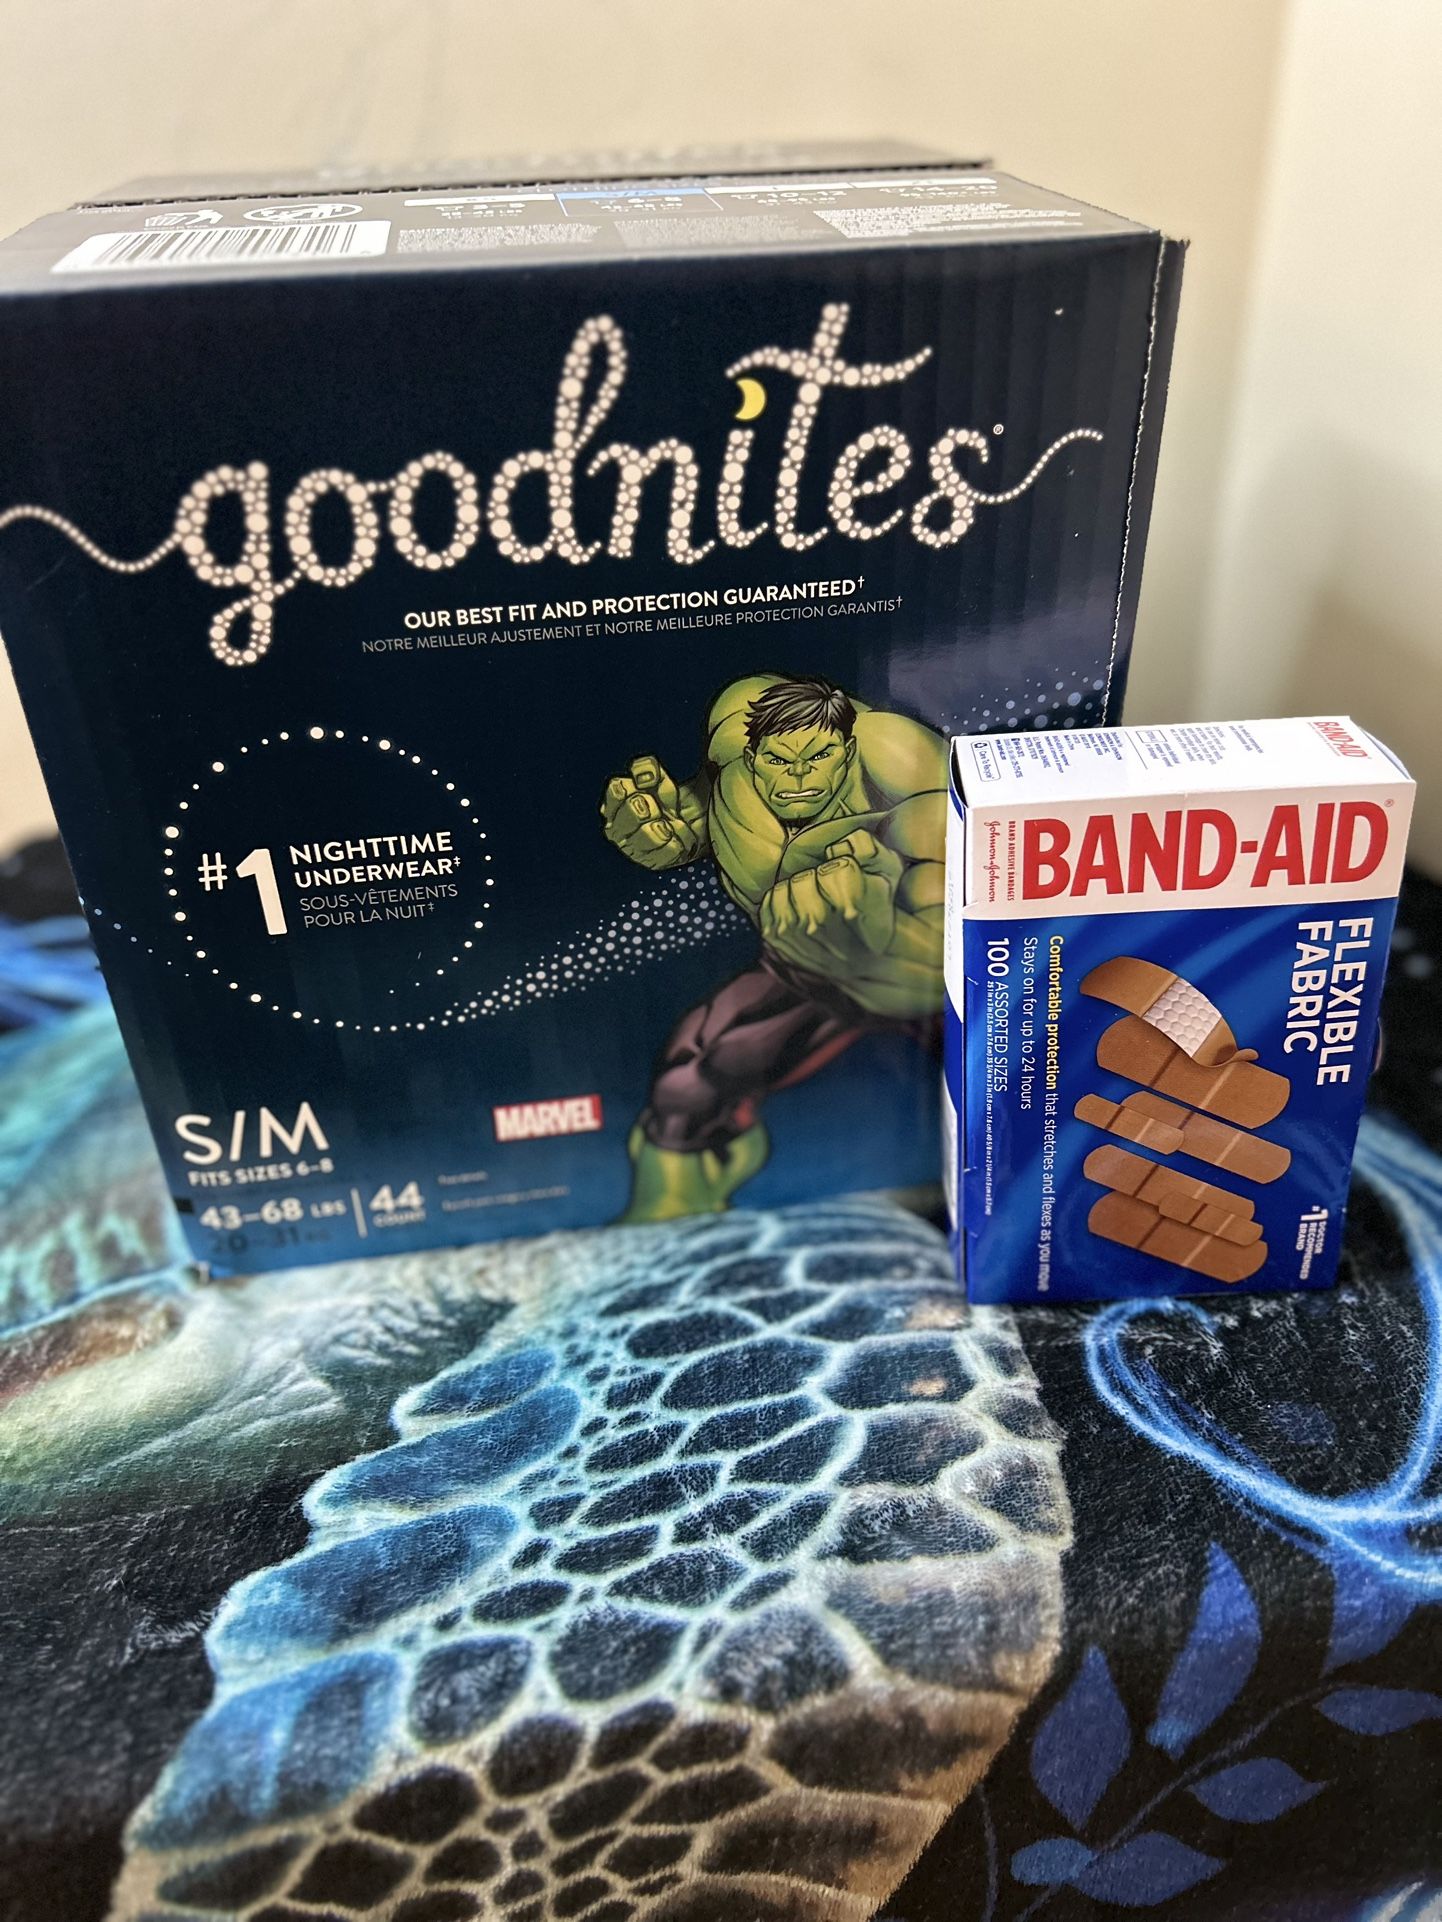 Goodnites, Band-AIDS